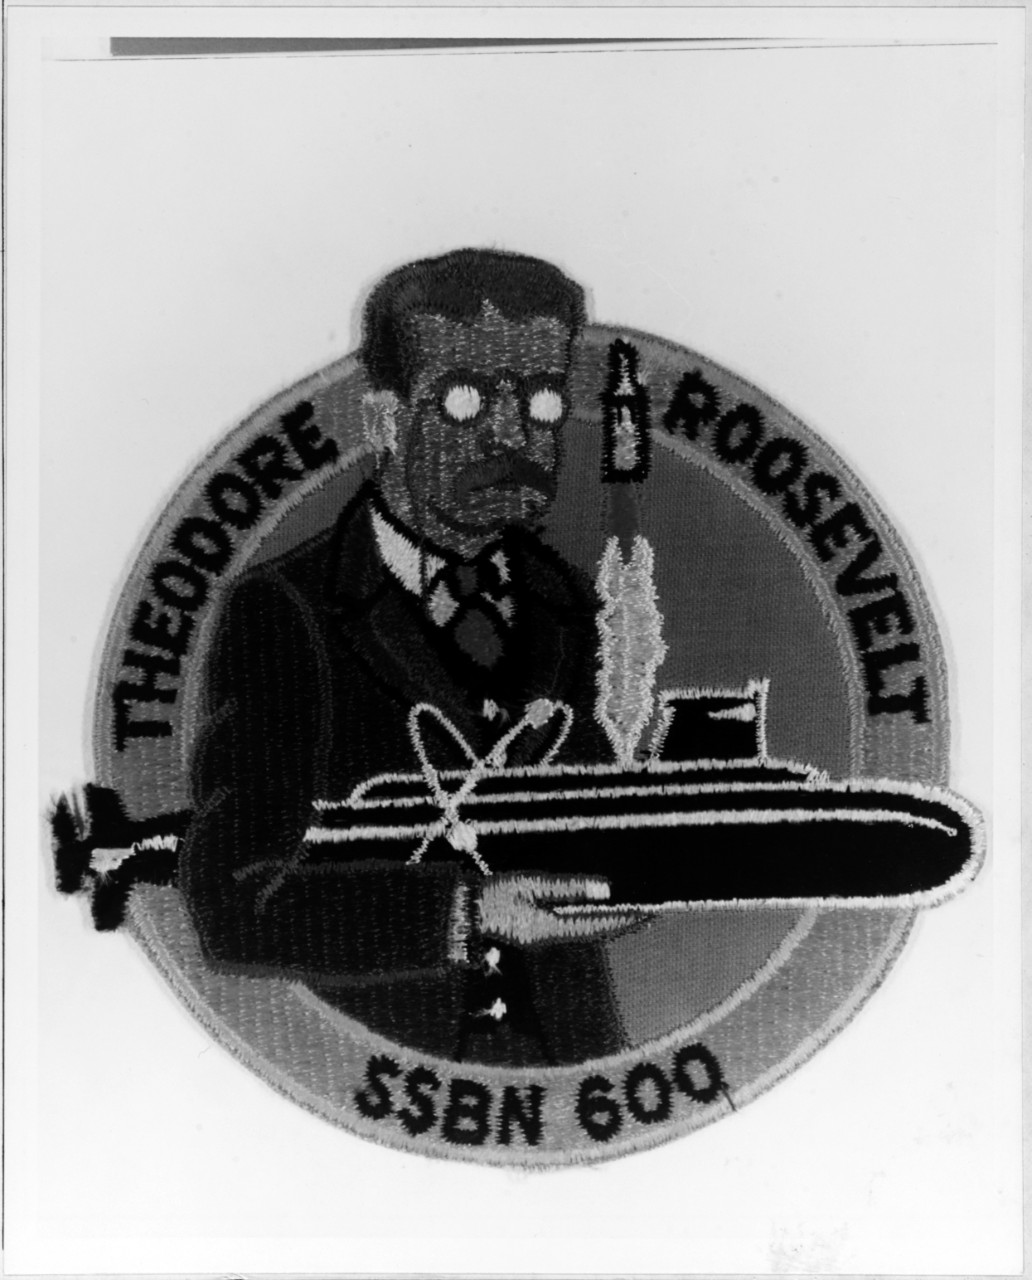 Insignia: USS THEODORE ROOSEVELT (SSBN-600)